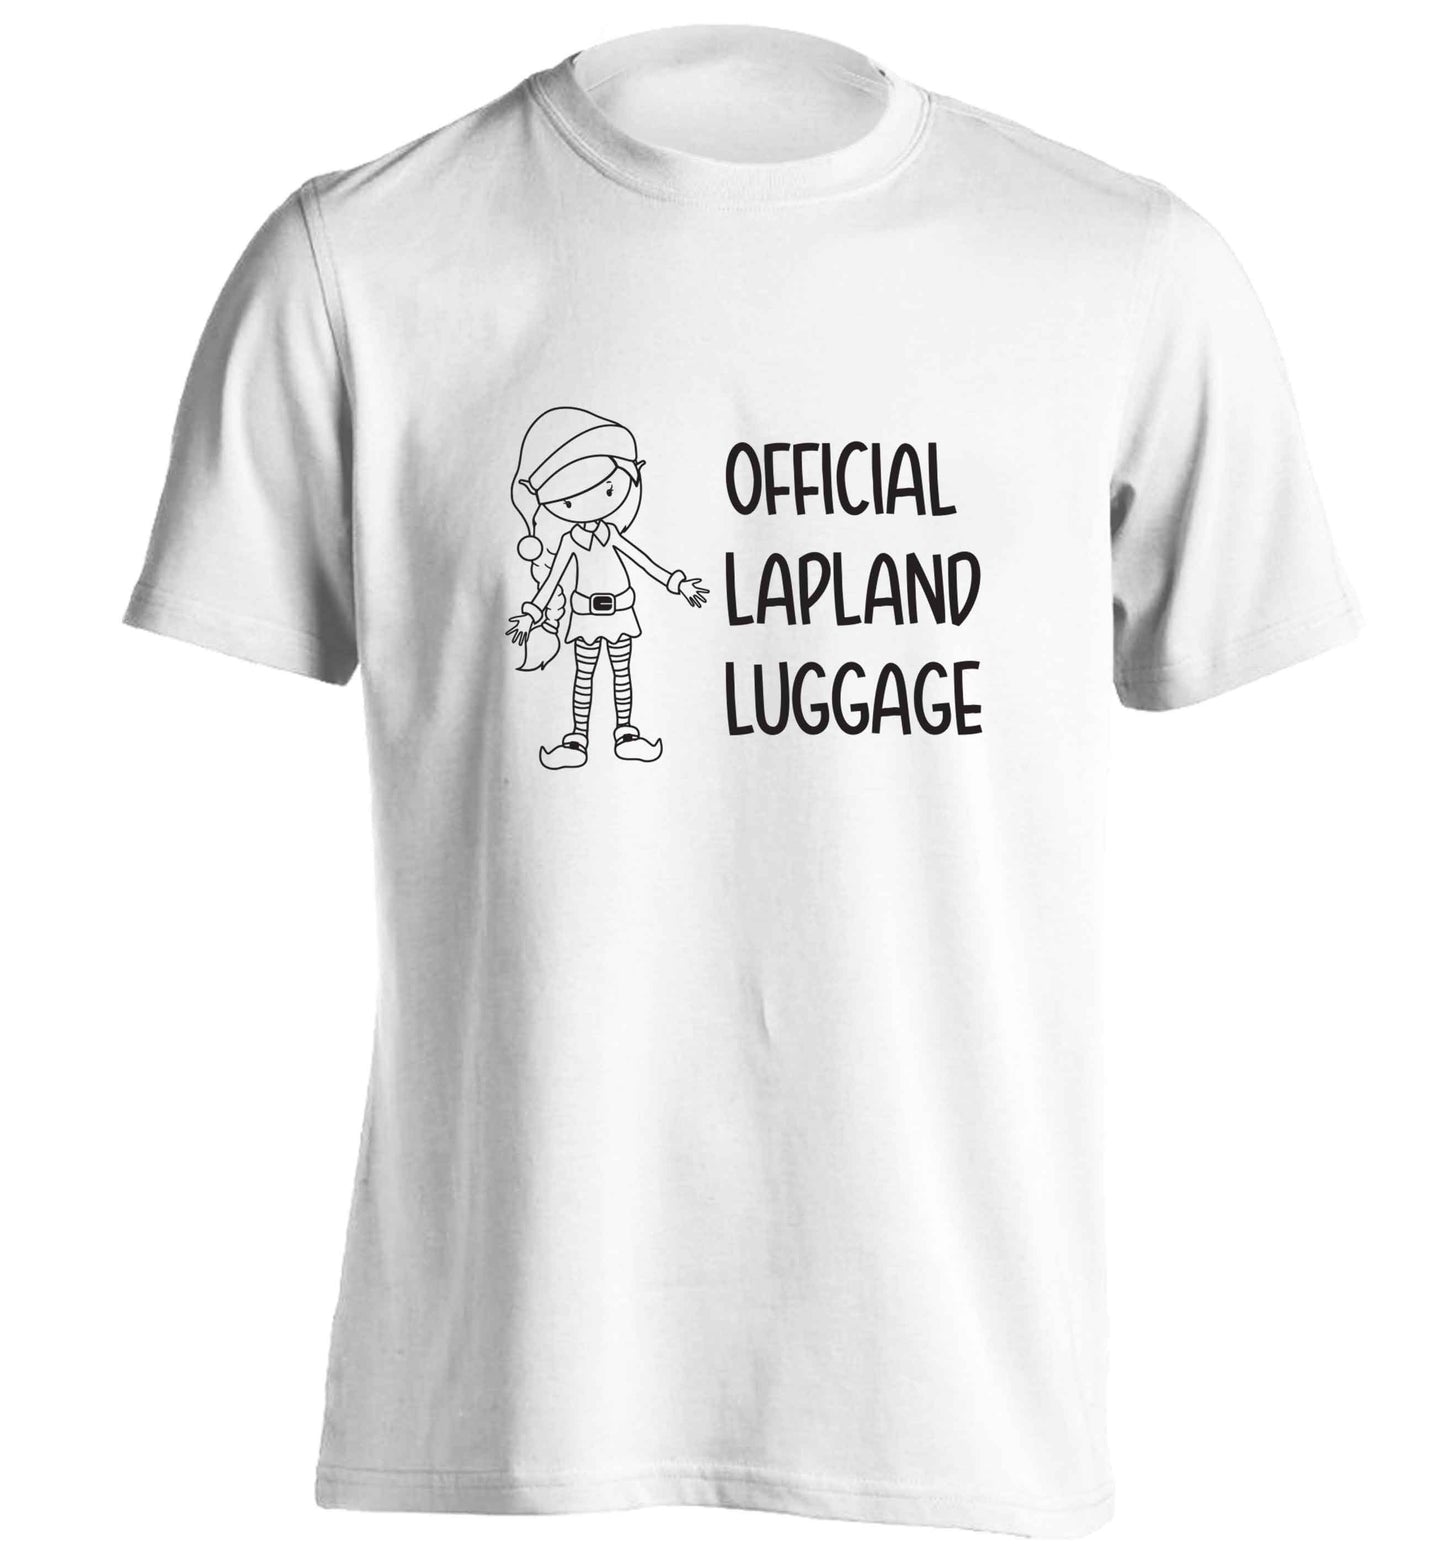 Official lapland luggage - Elf snowflake adults unisex white Tshirt 2XL